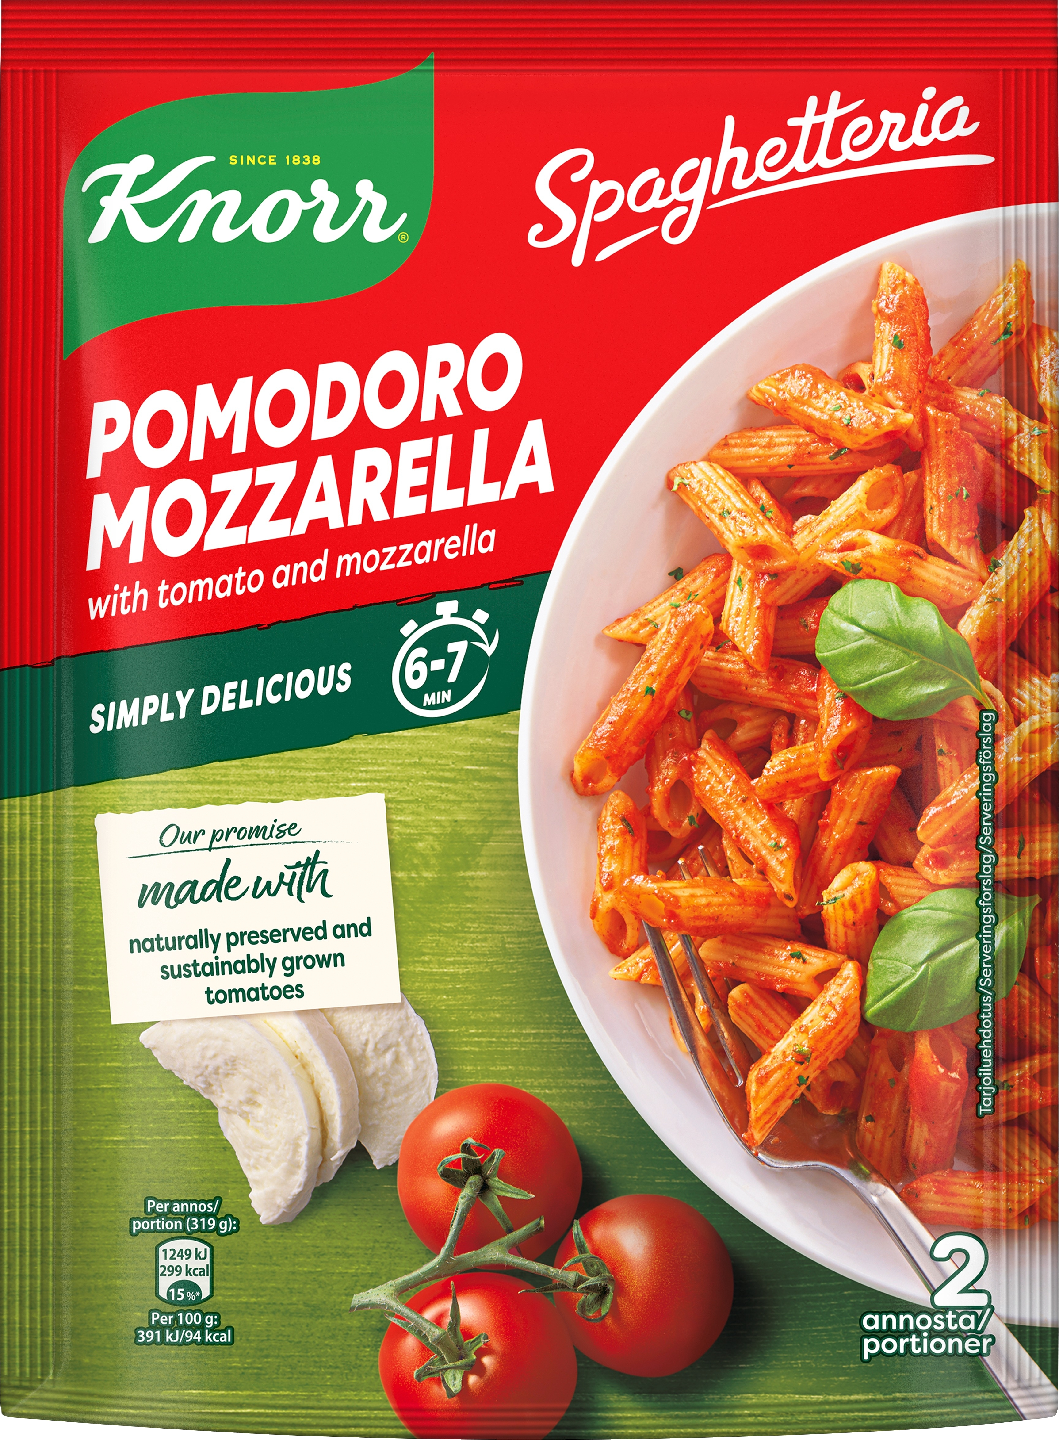 Knorr Spaghetteria 163g mozzarella